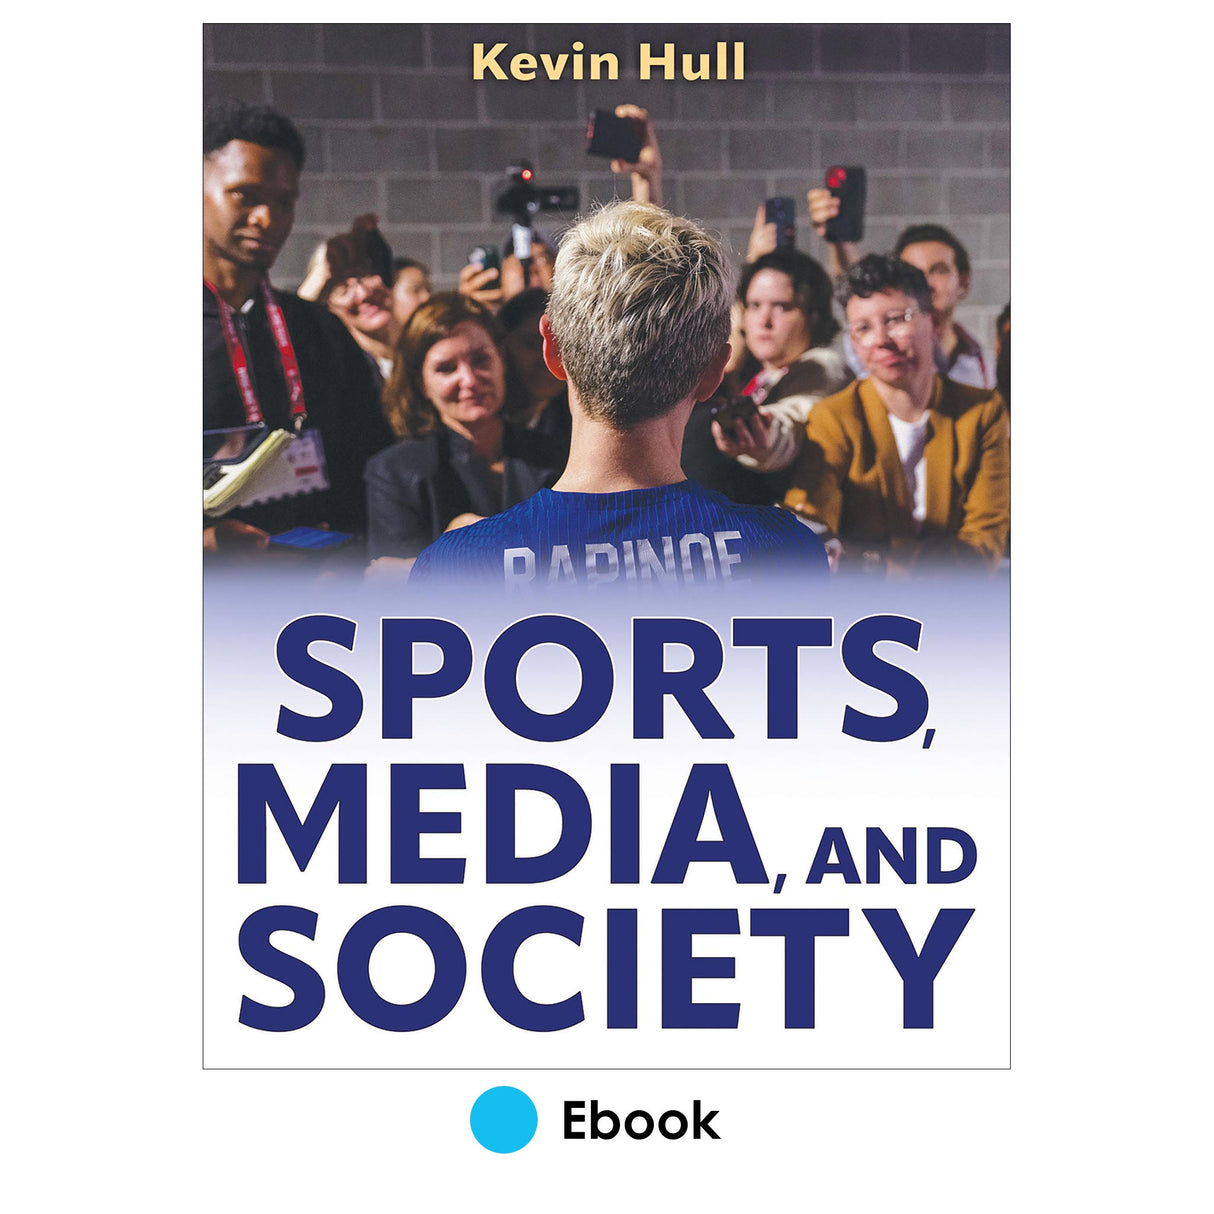 Sports, Media, and Society epub